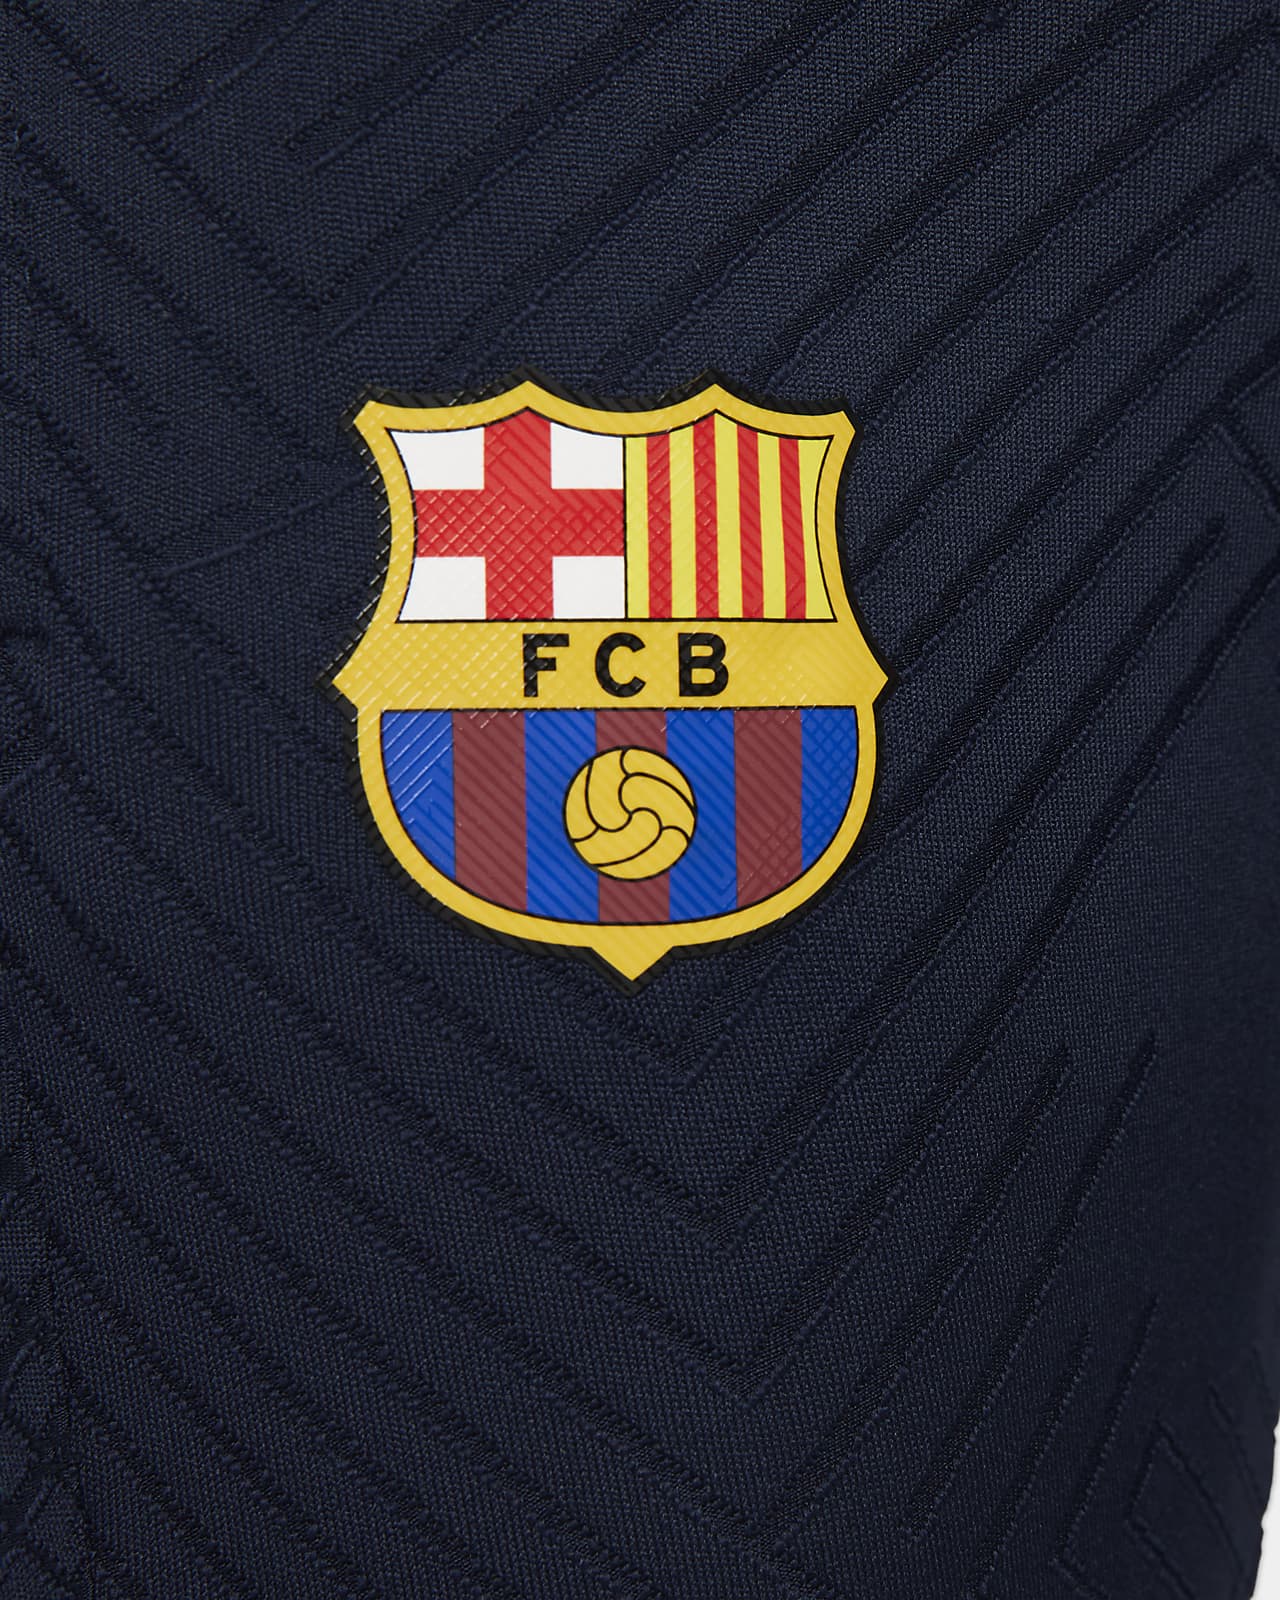 F.C. Barcelona Strike Elite Men's Nike Dri-FIT ADV Football Pants